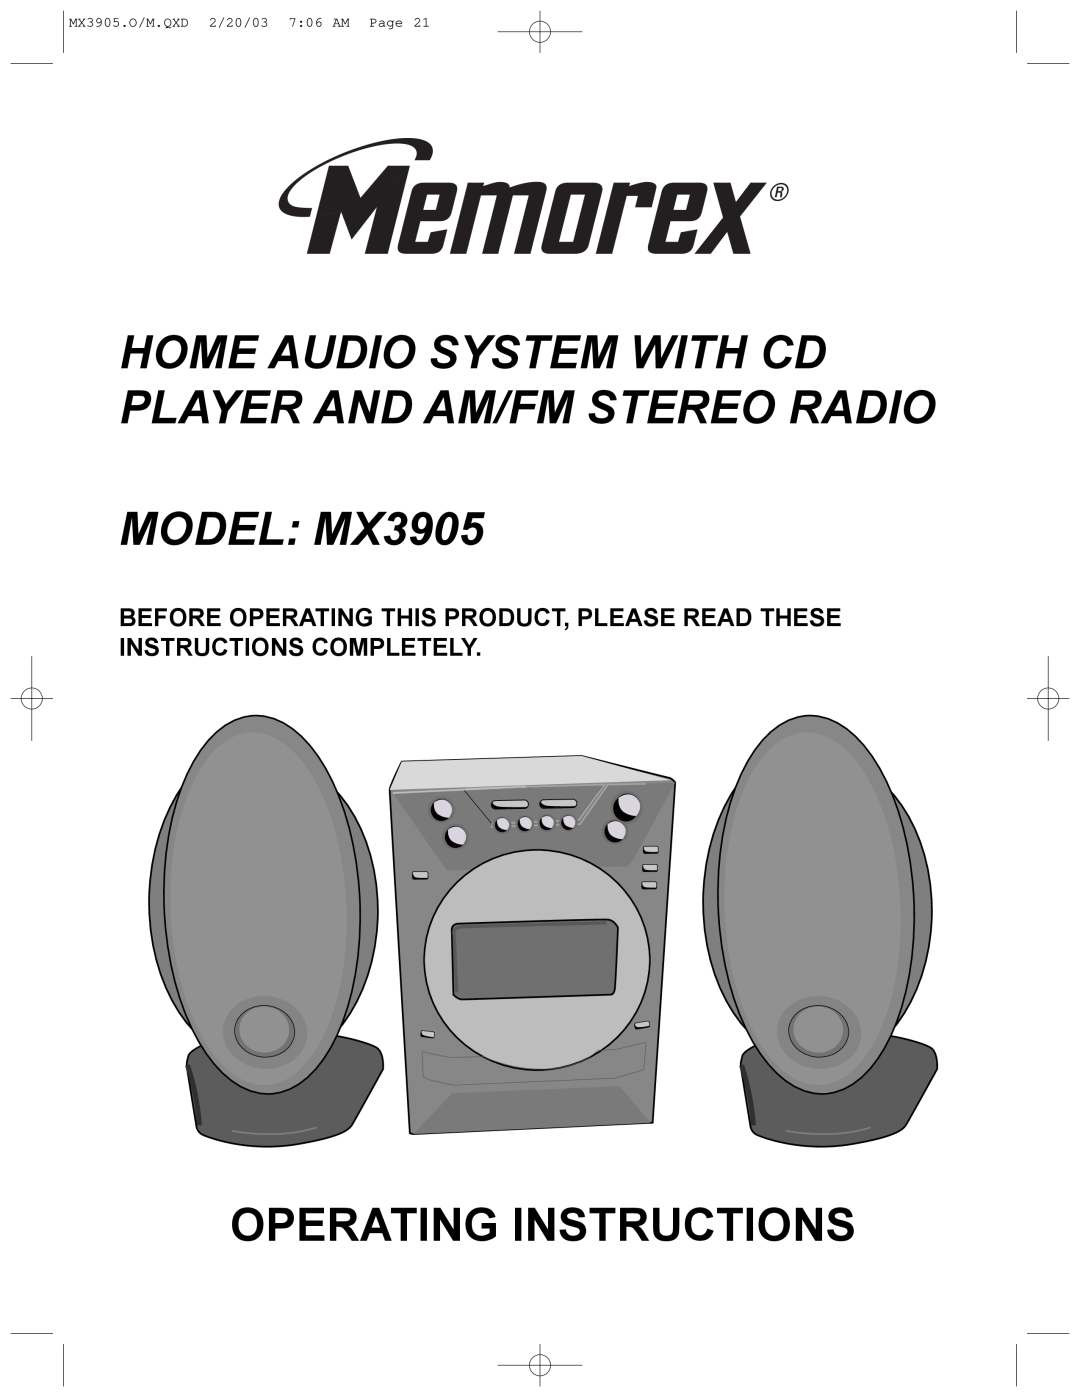 Memorex manual MODEL MX3905, Operating Instructions, MX3905.O/M.QXD 2/20/03 7 06 AM Page 